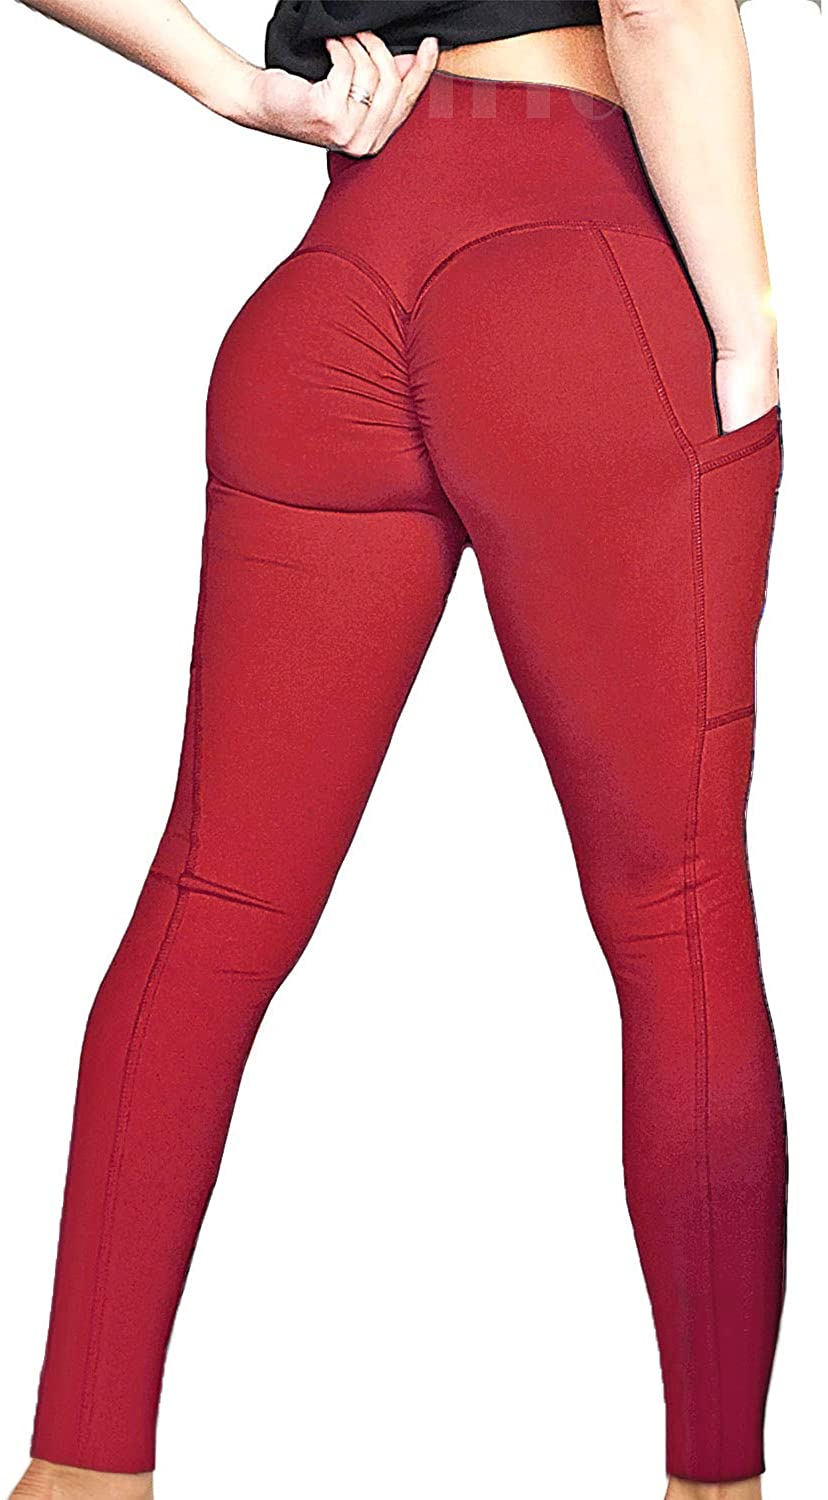 Women's Leggings Red Roses Printed Workout Pants – YOGAHAREM